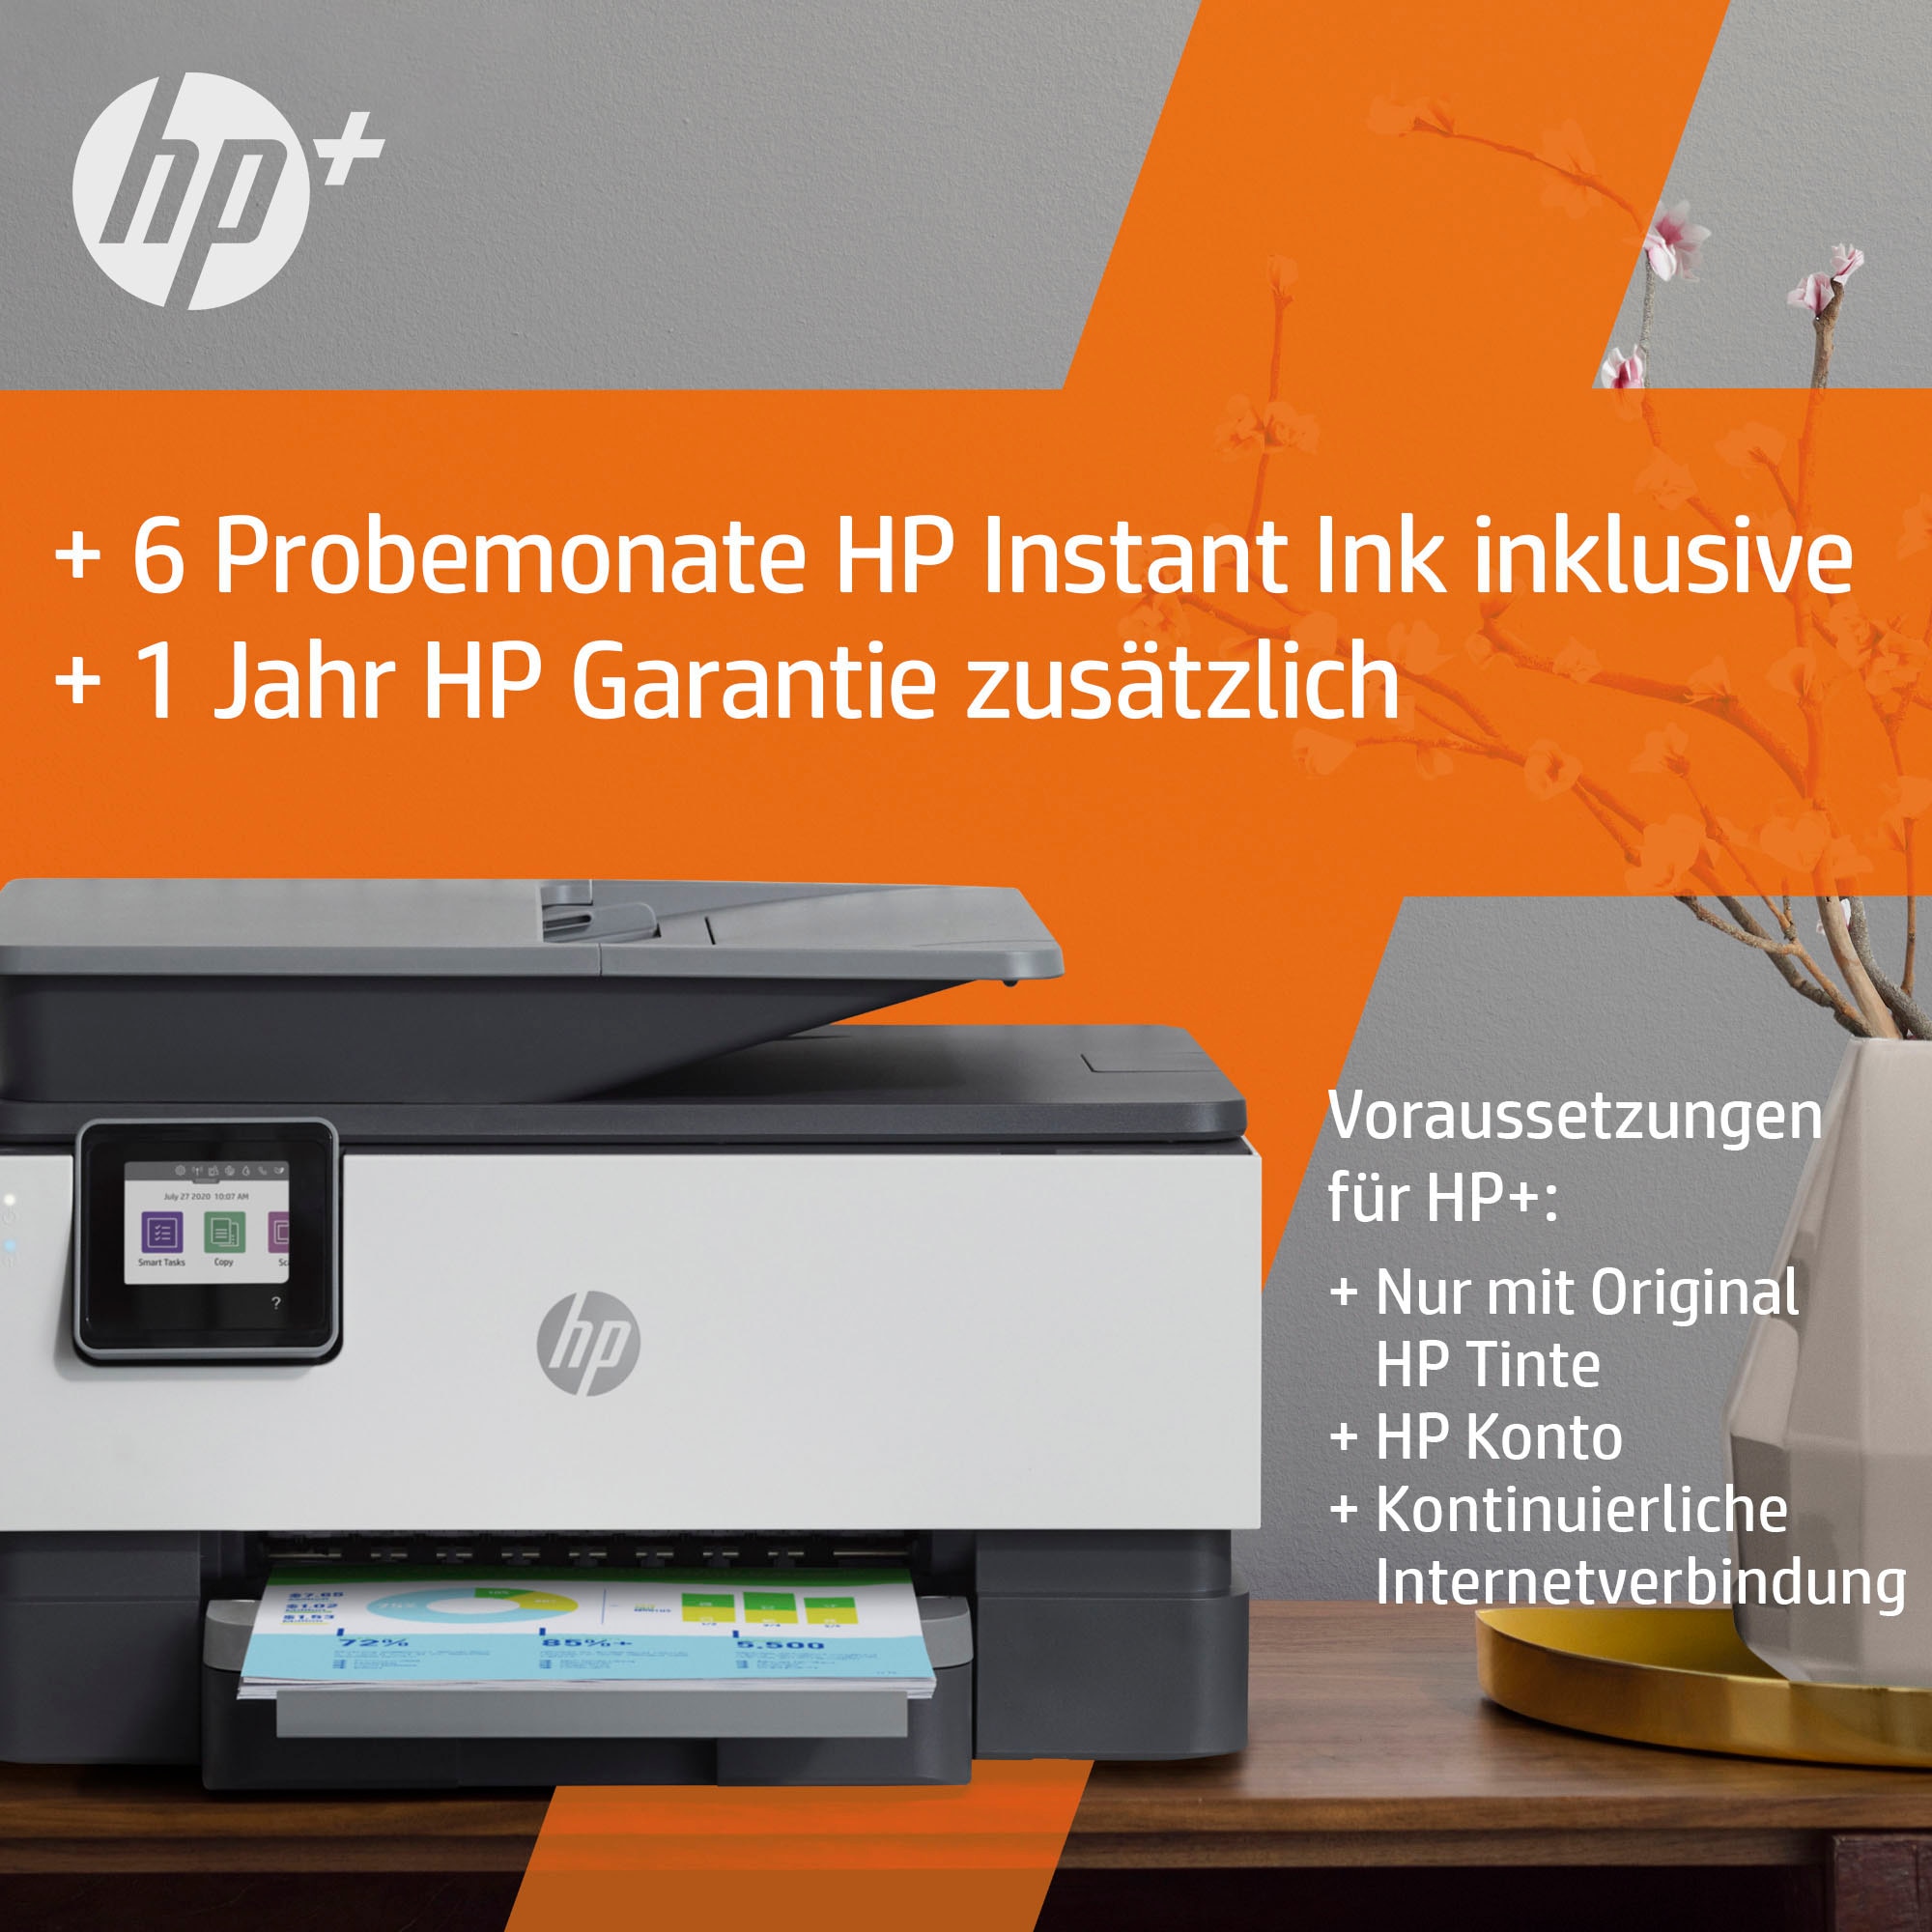 HP Multifunktionsdrucker »OfficeJet Pro 9012e«, 6 Monate gratis Drucken mit HP Instant Ink inklusive